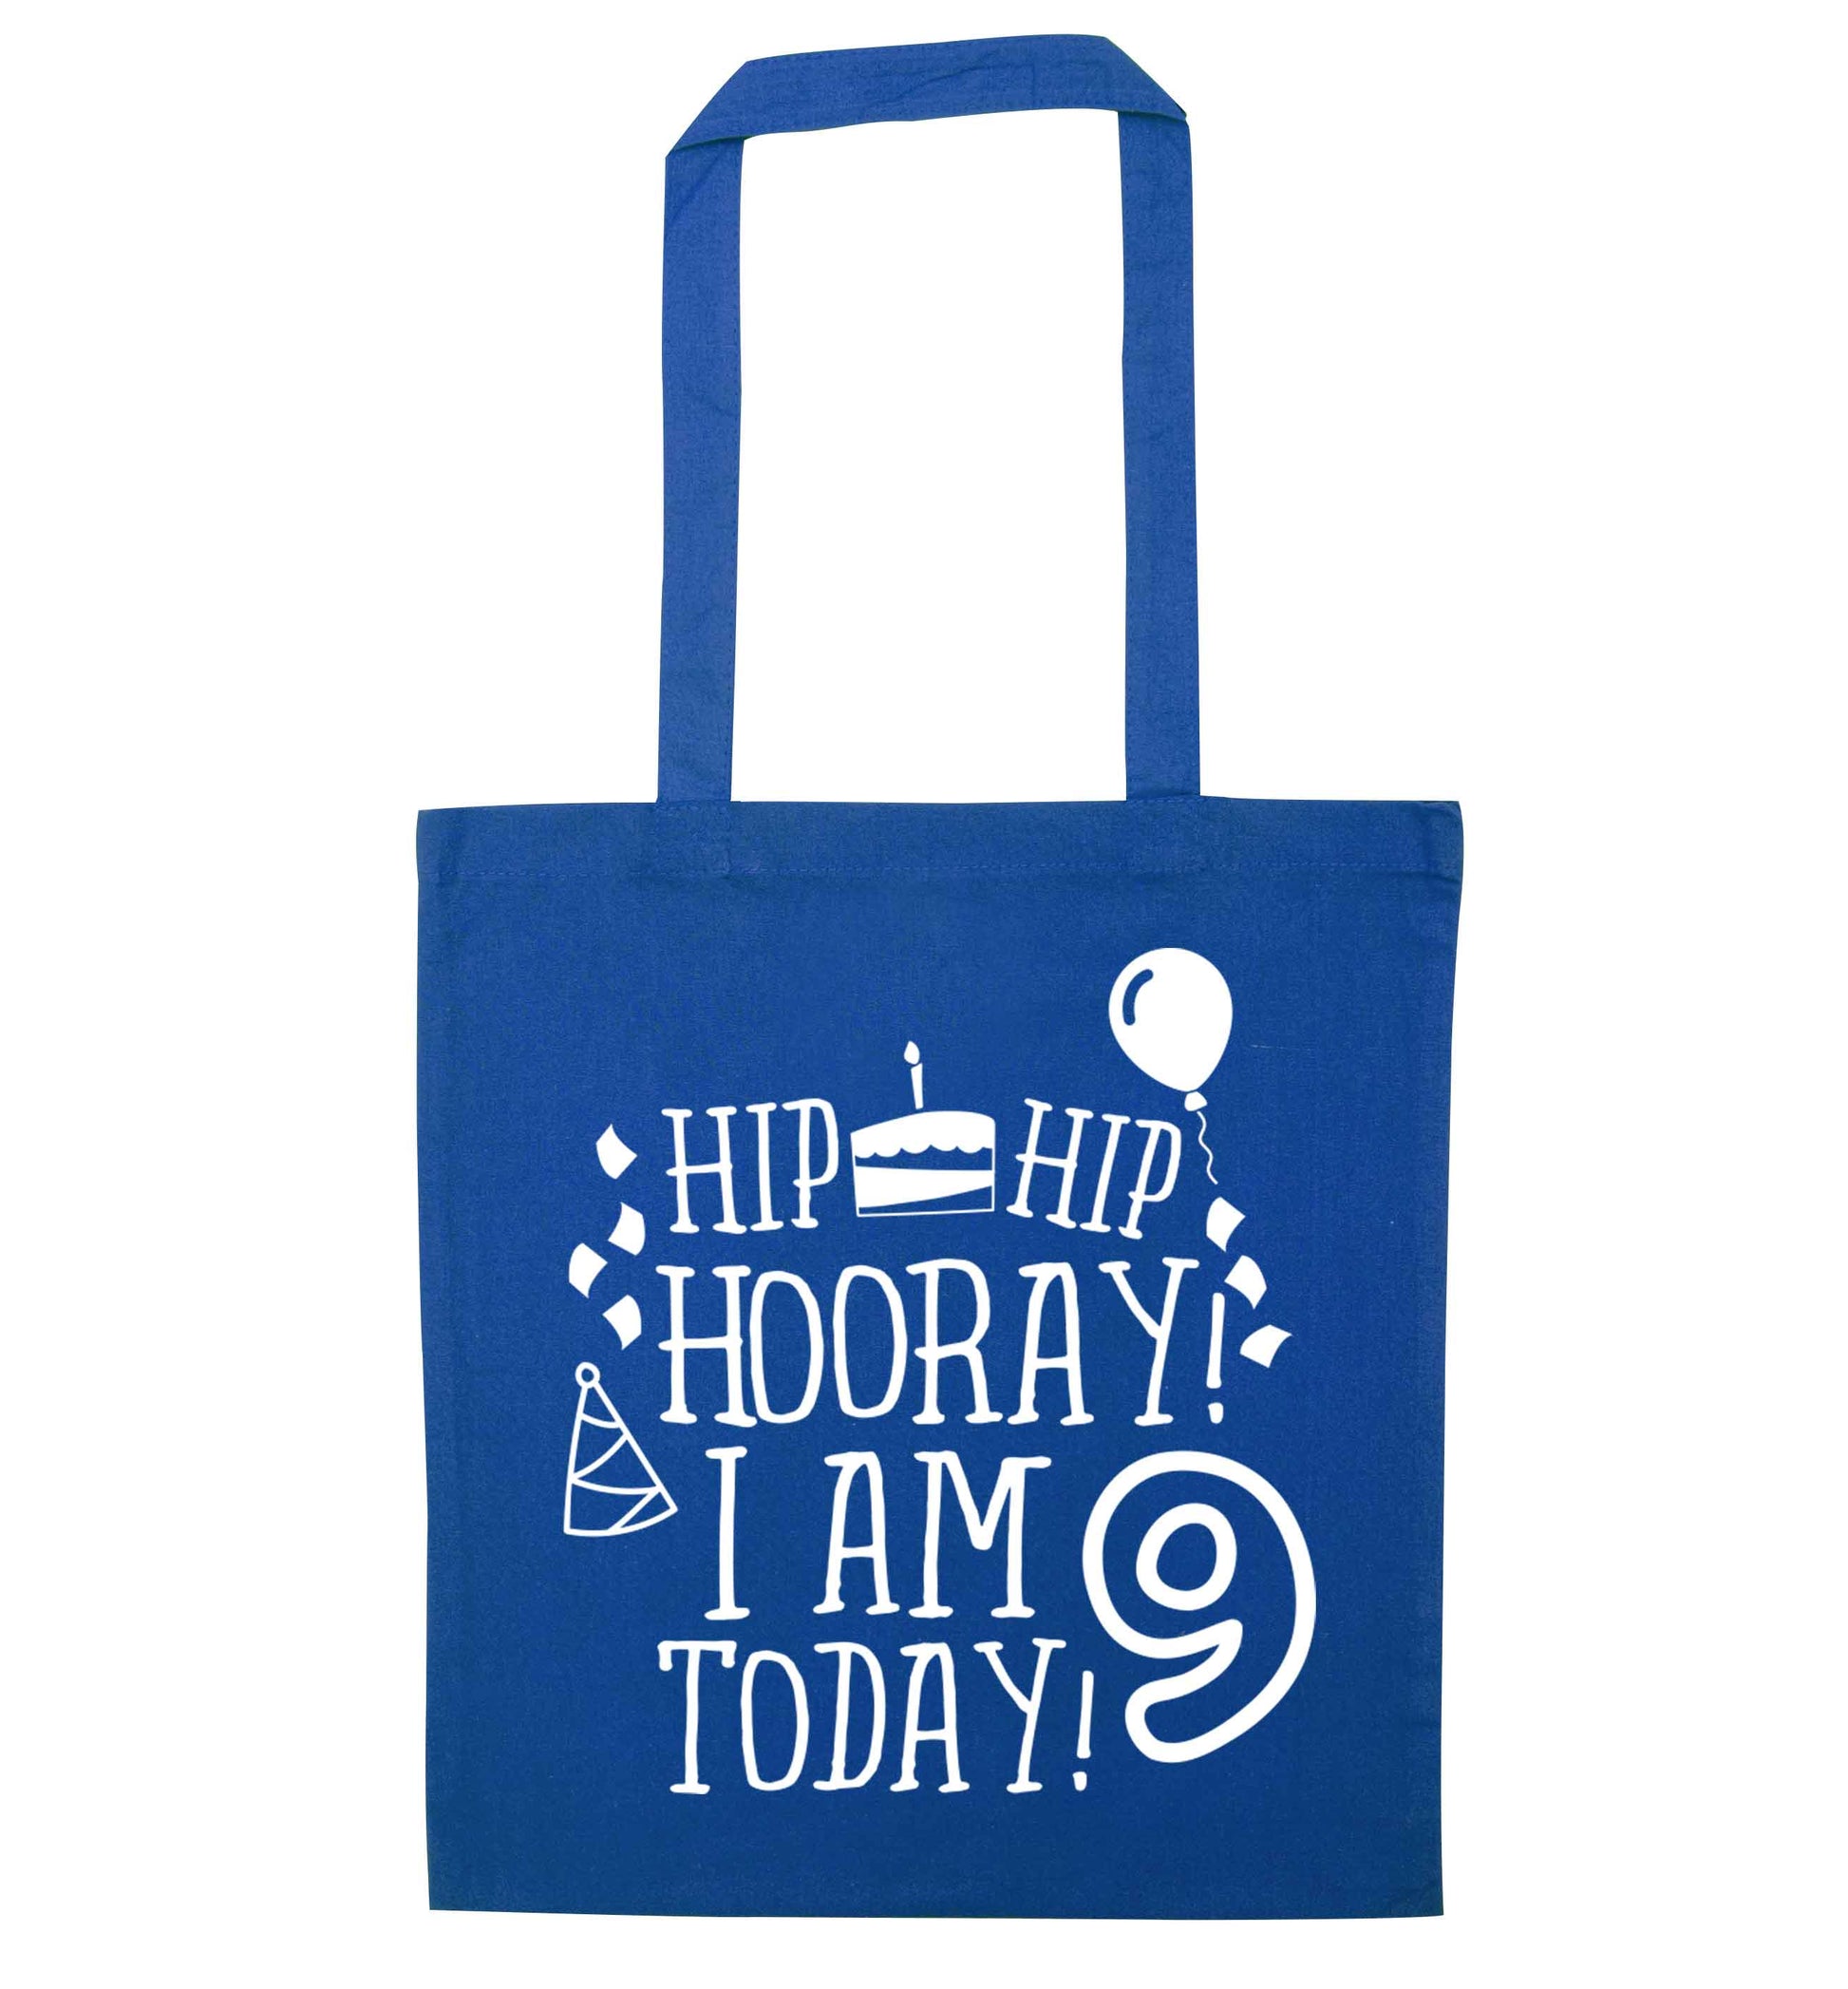 Hip hip hooray I am 9 today! blue tote bag